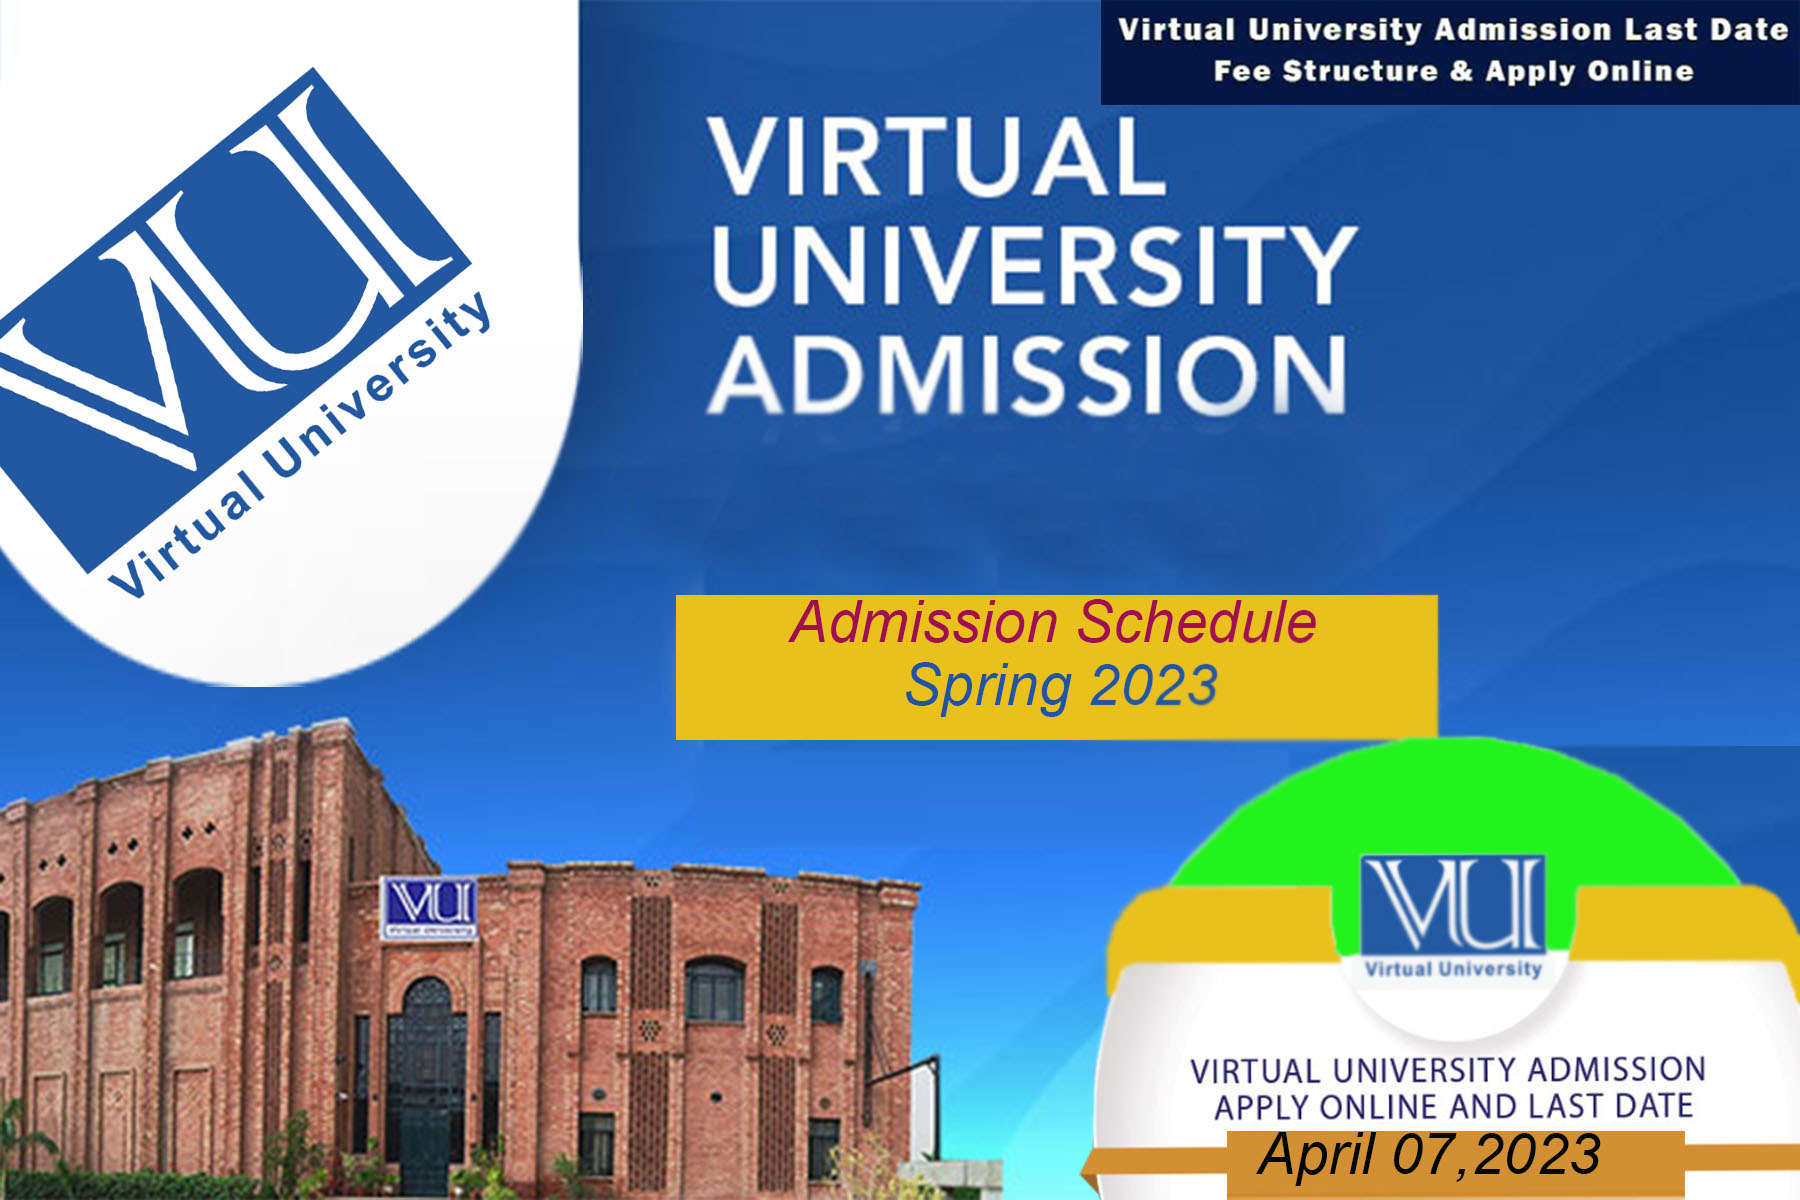 virtual university main campus